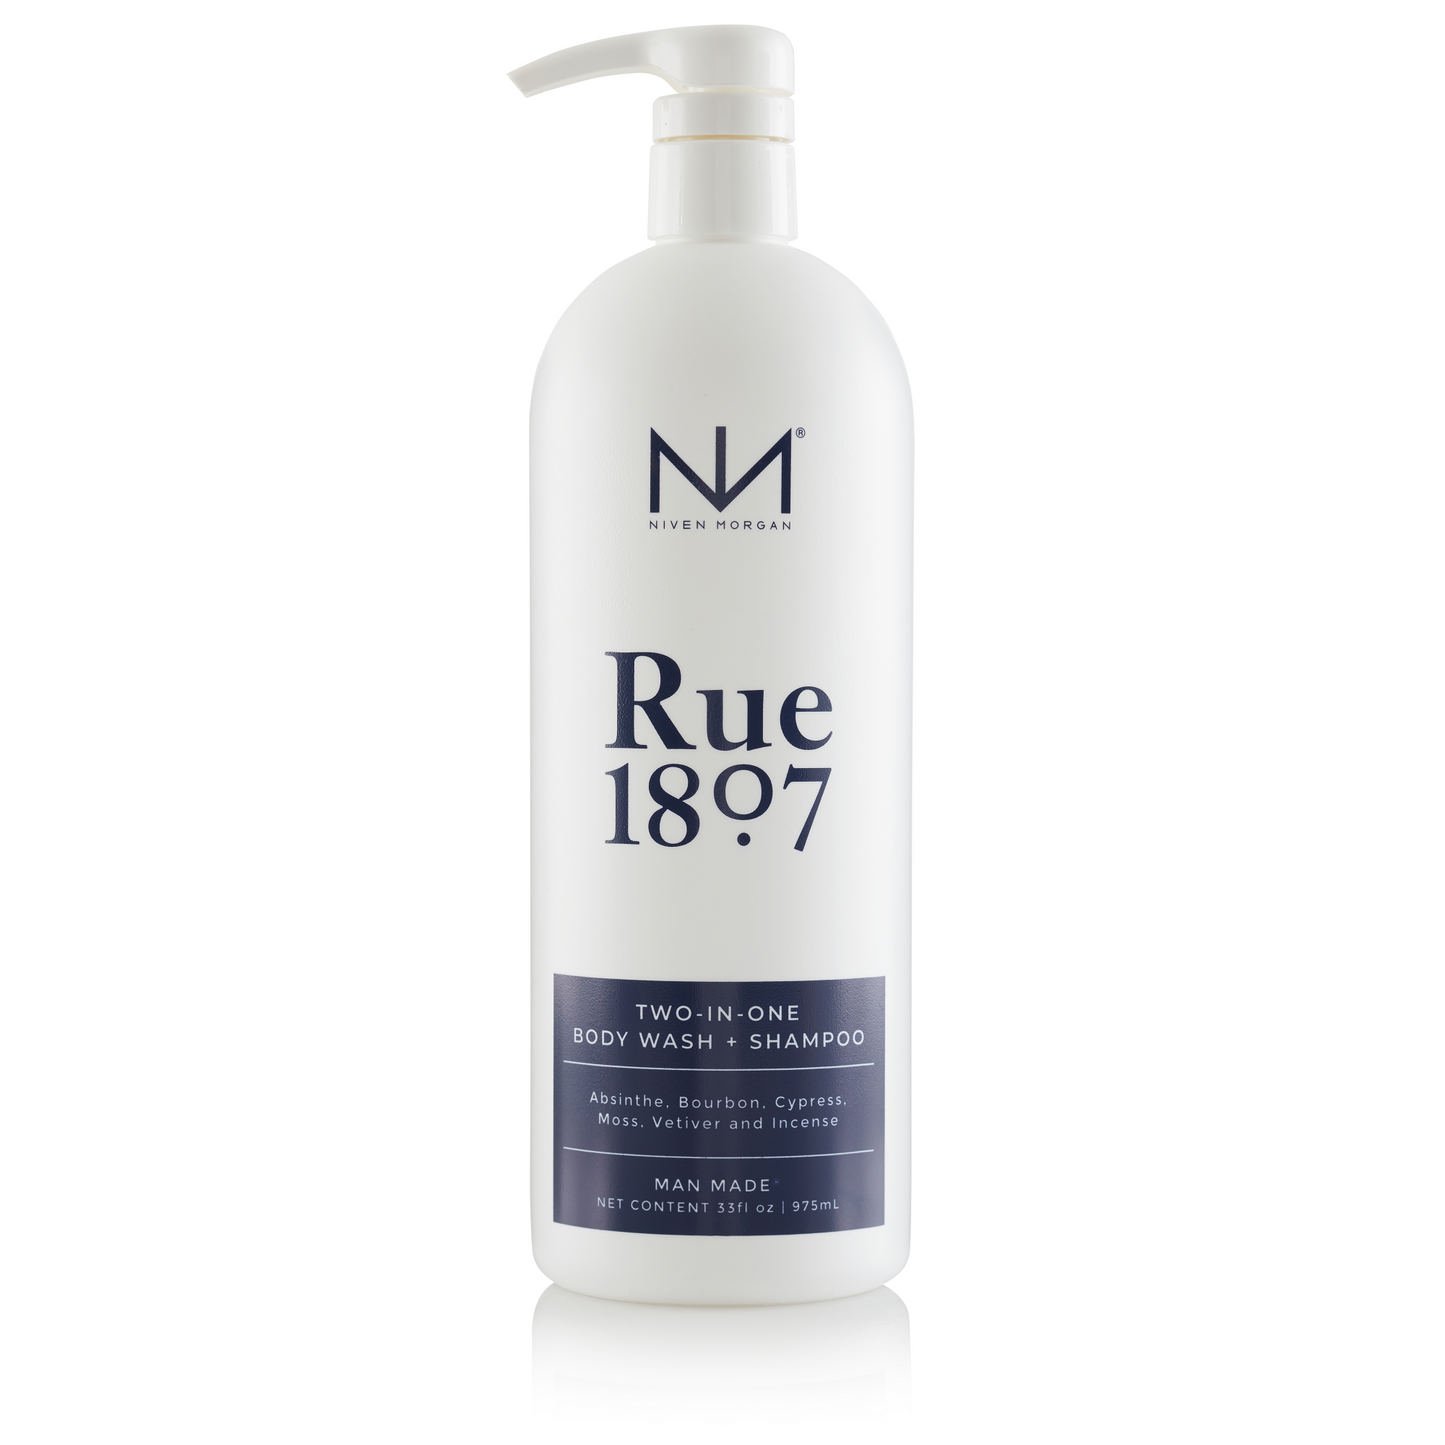 Niven Morgan Rue 1807 2-in-1 Body Wash & Shampoo